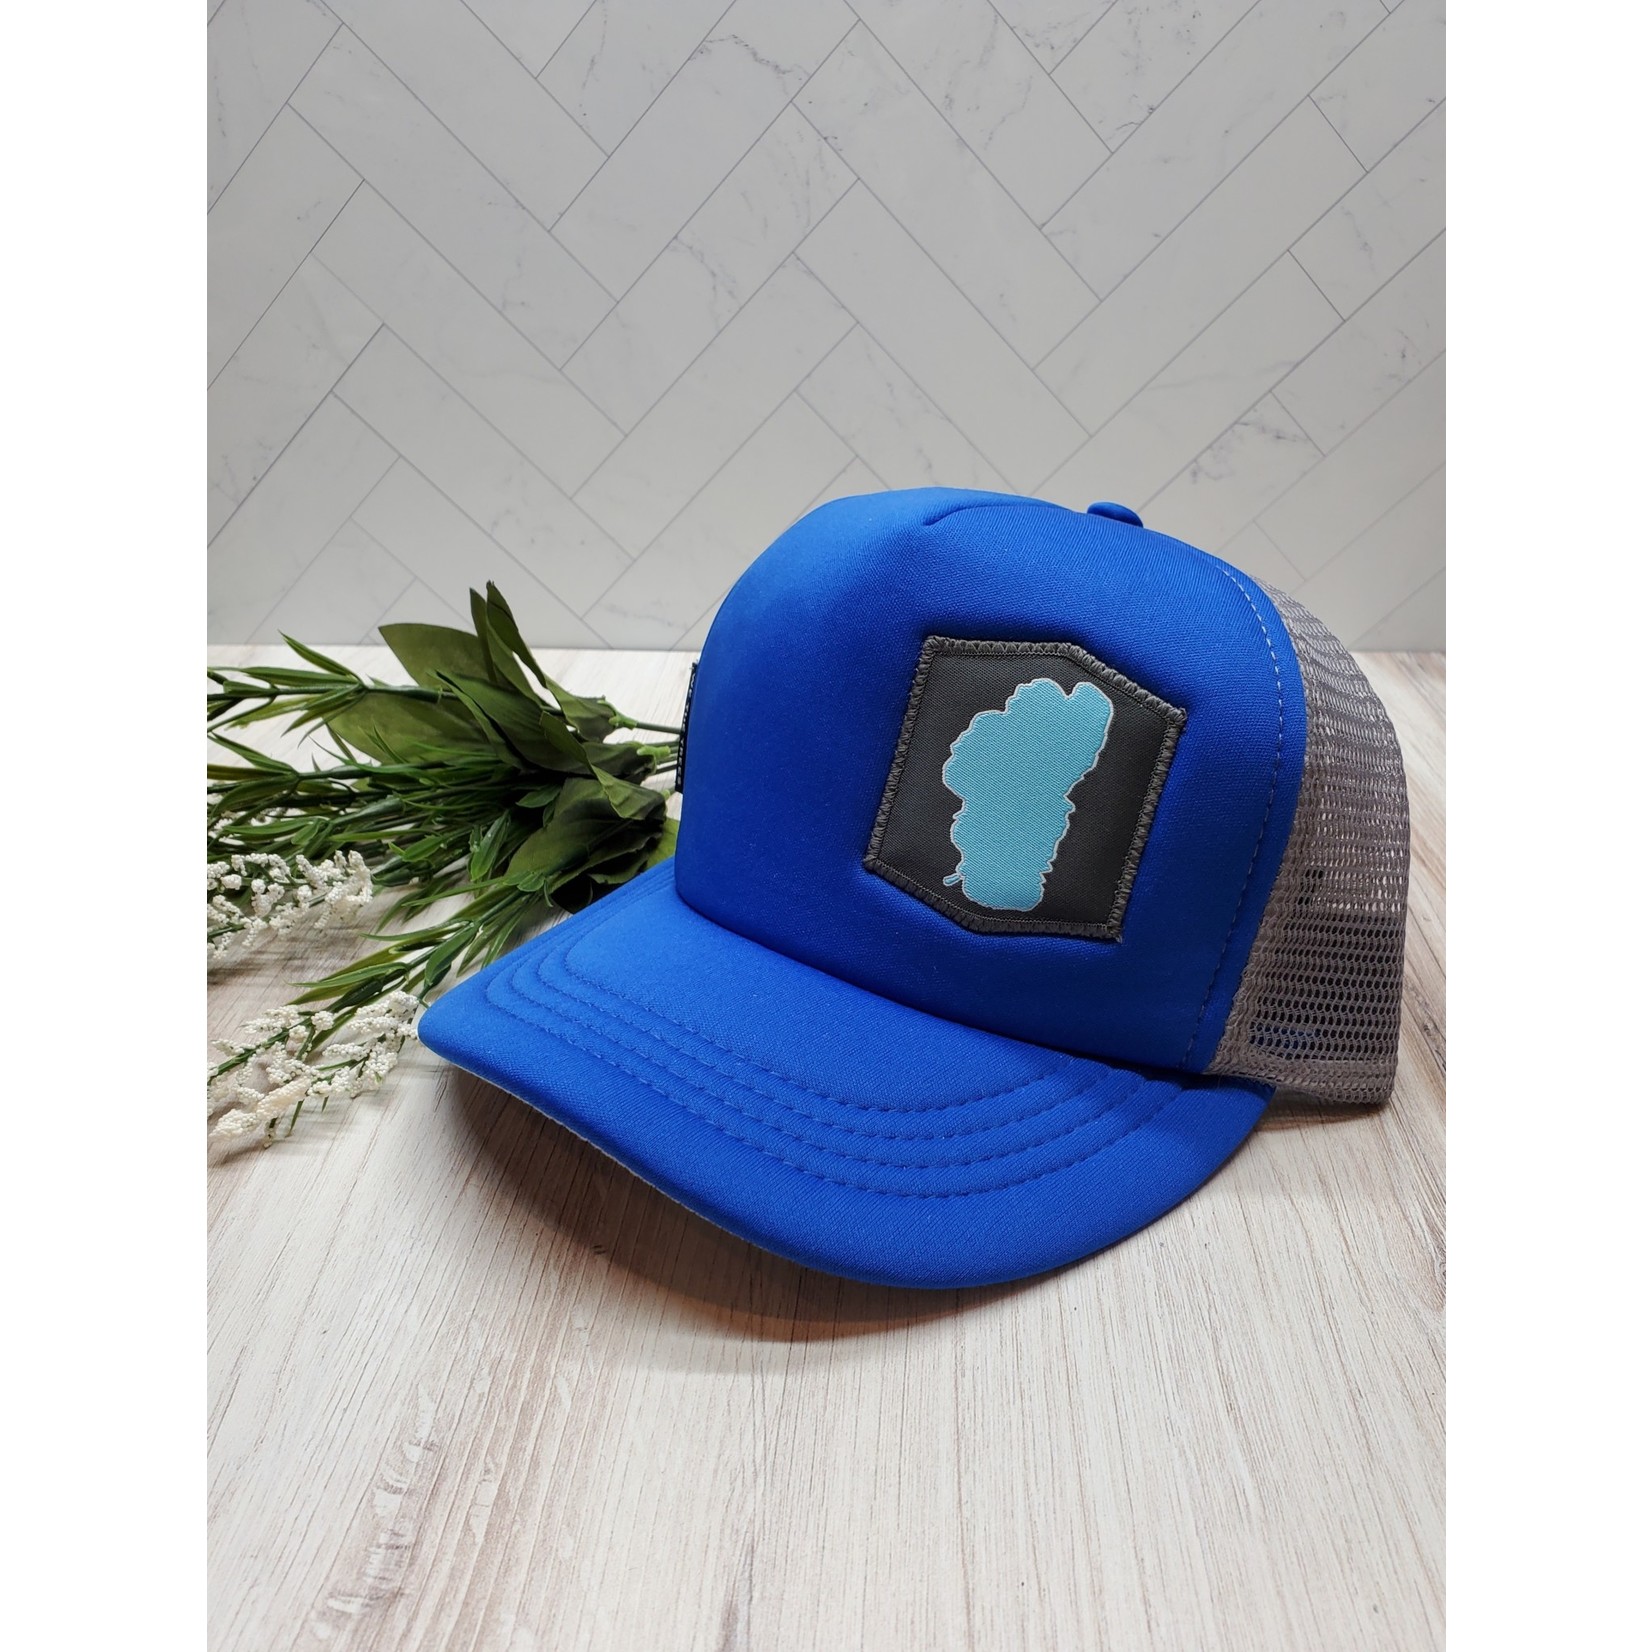 We the Trees Lake Tahoe - Blue - Trucker Hat